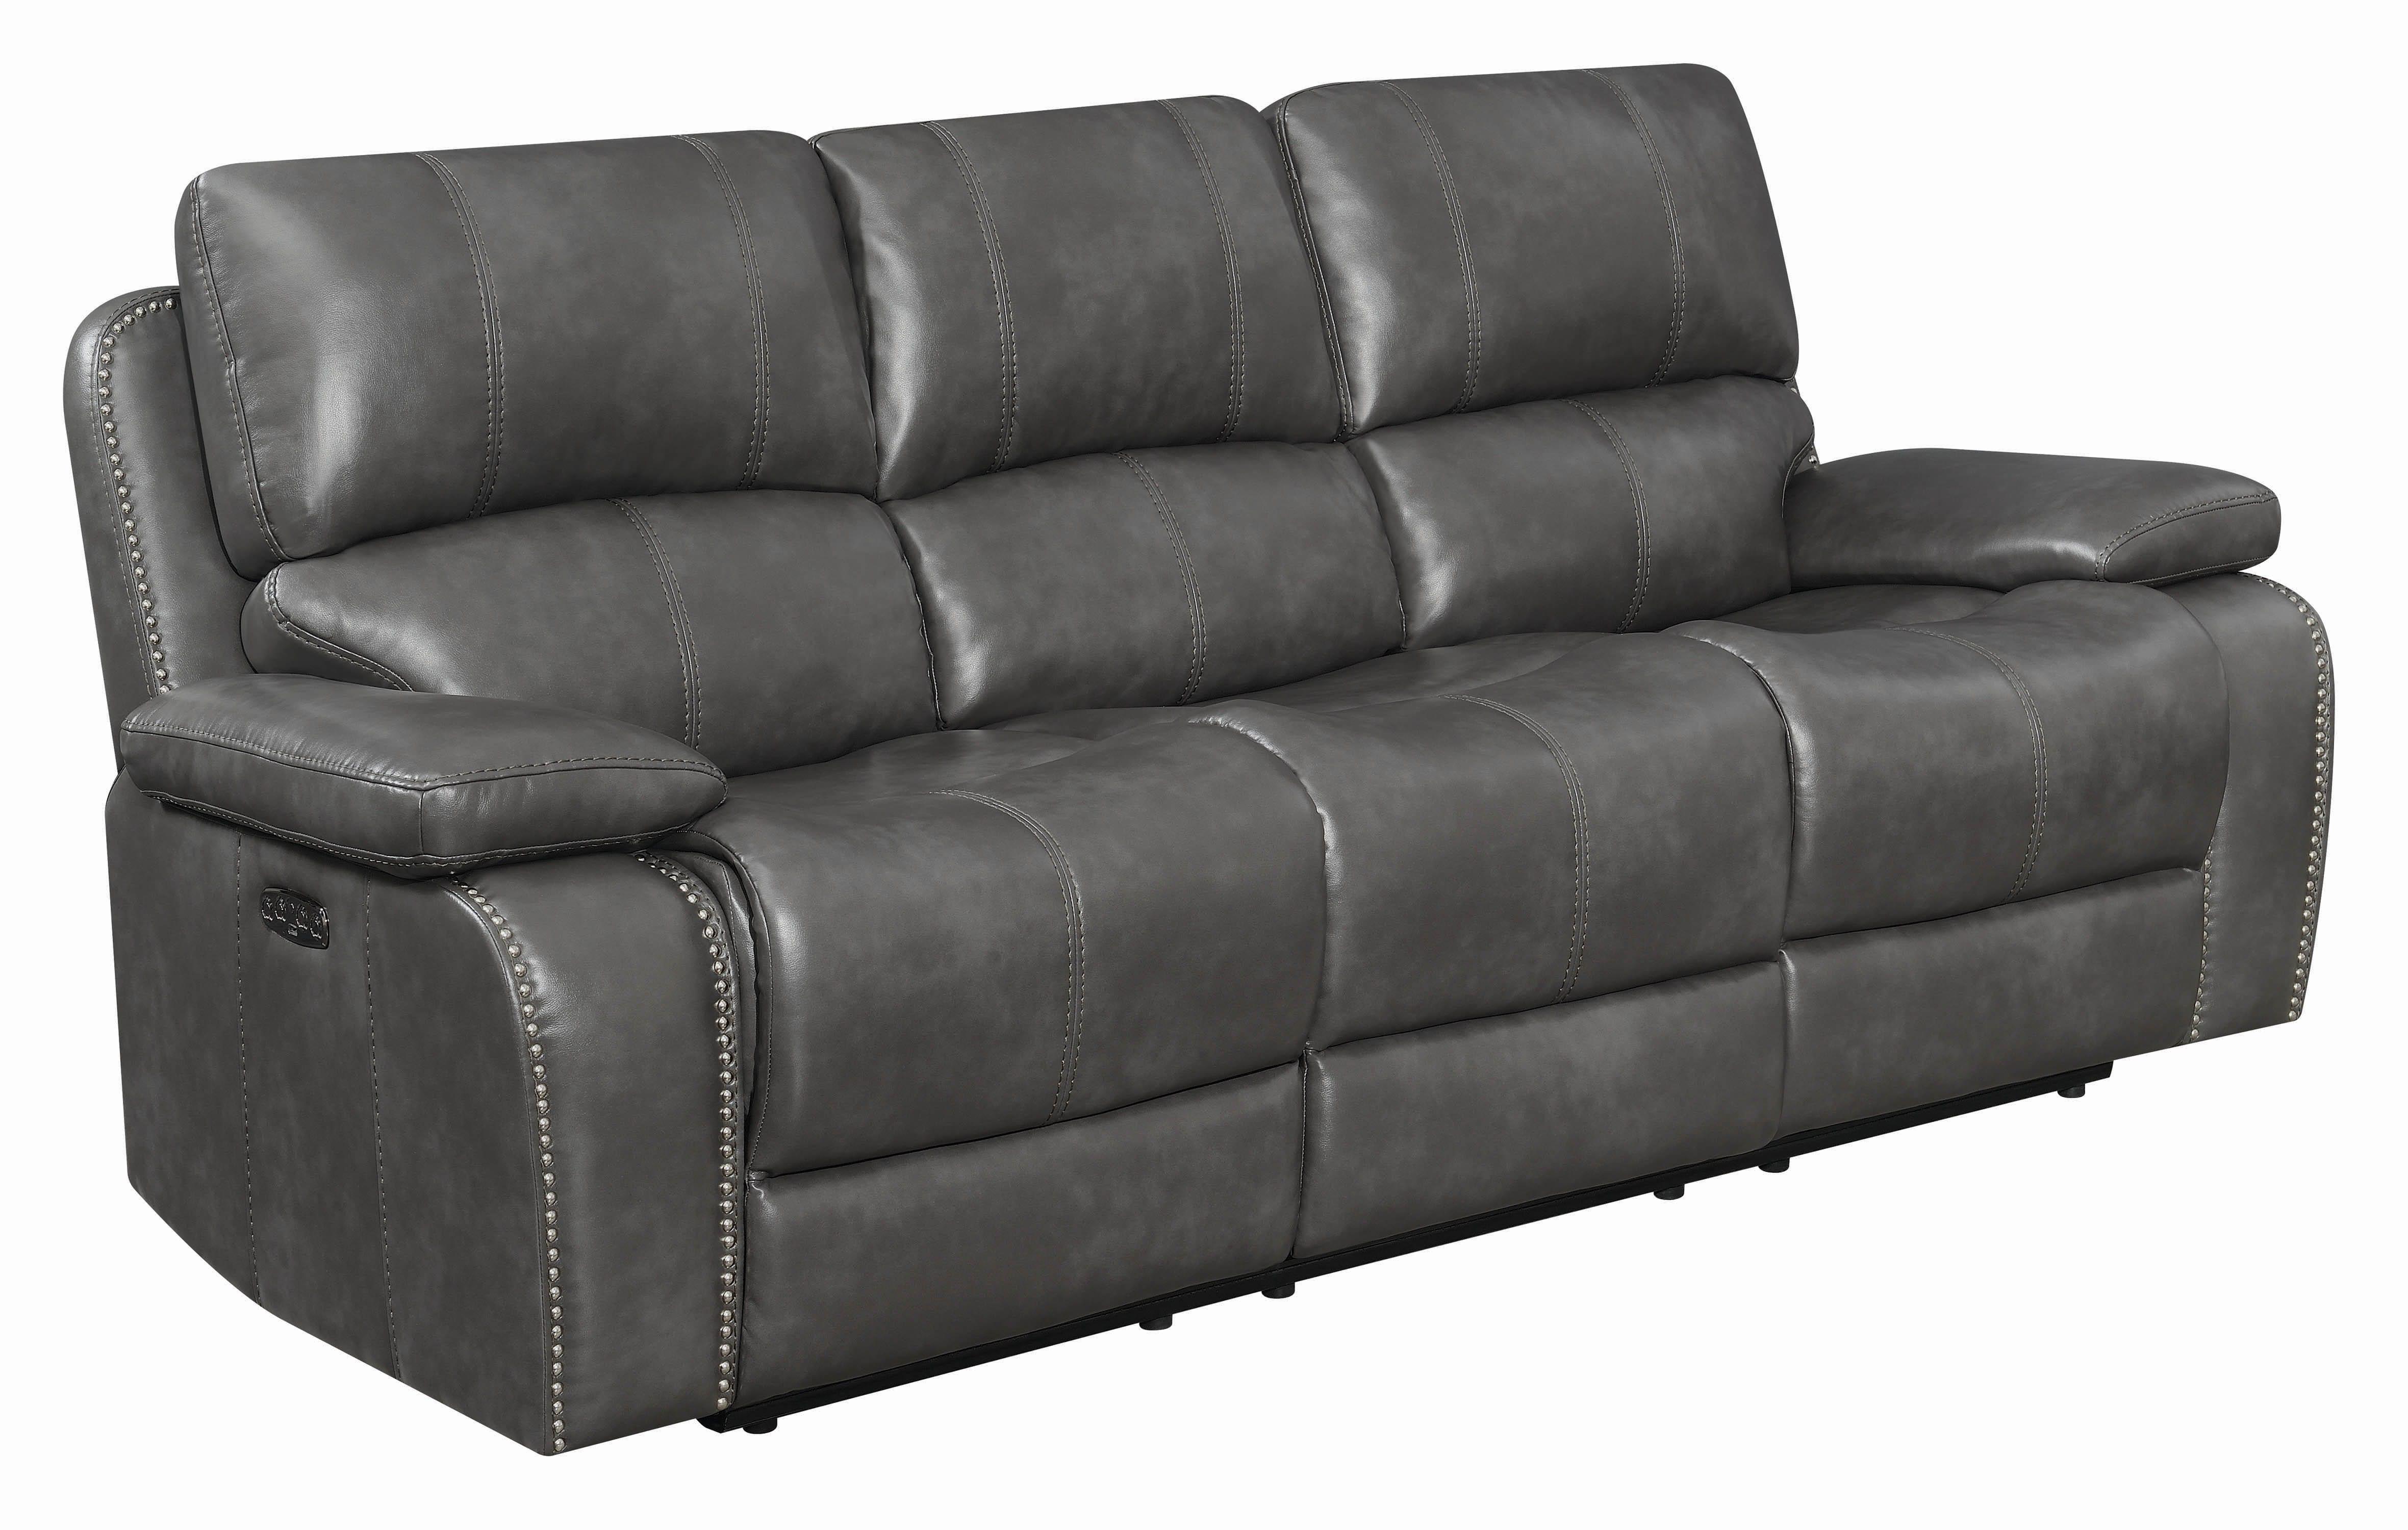 Modern Power sofa Ravenna 603211P in Gray Leather